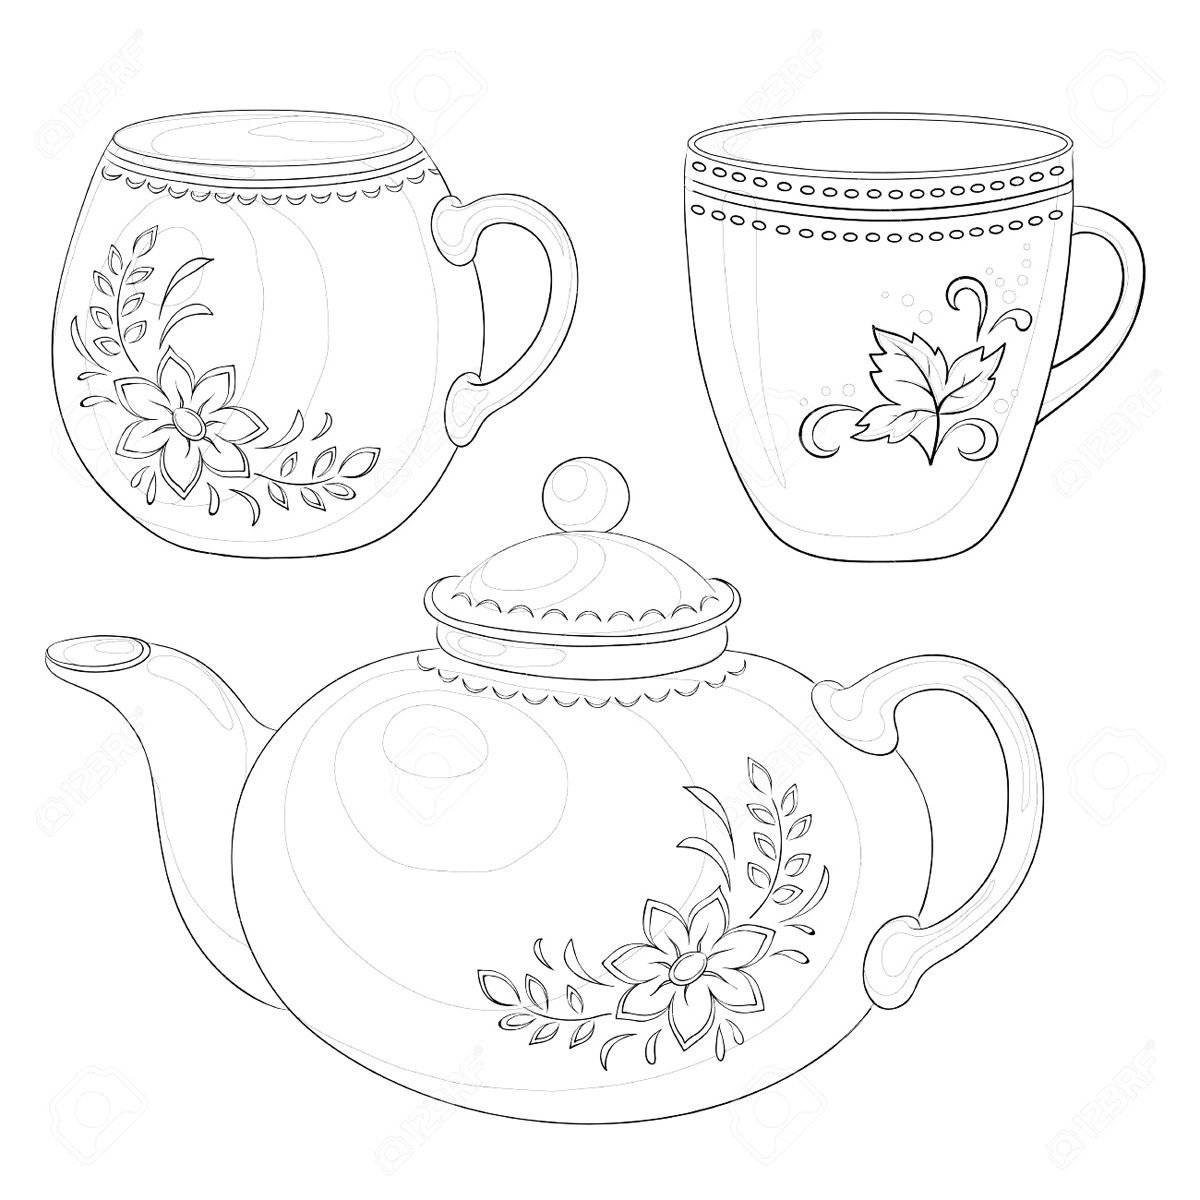 Great Gzhel teapot coloring book